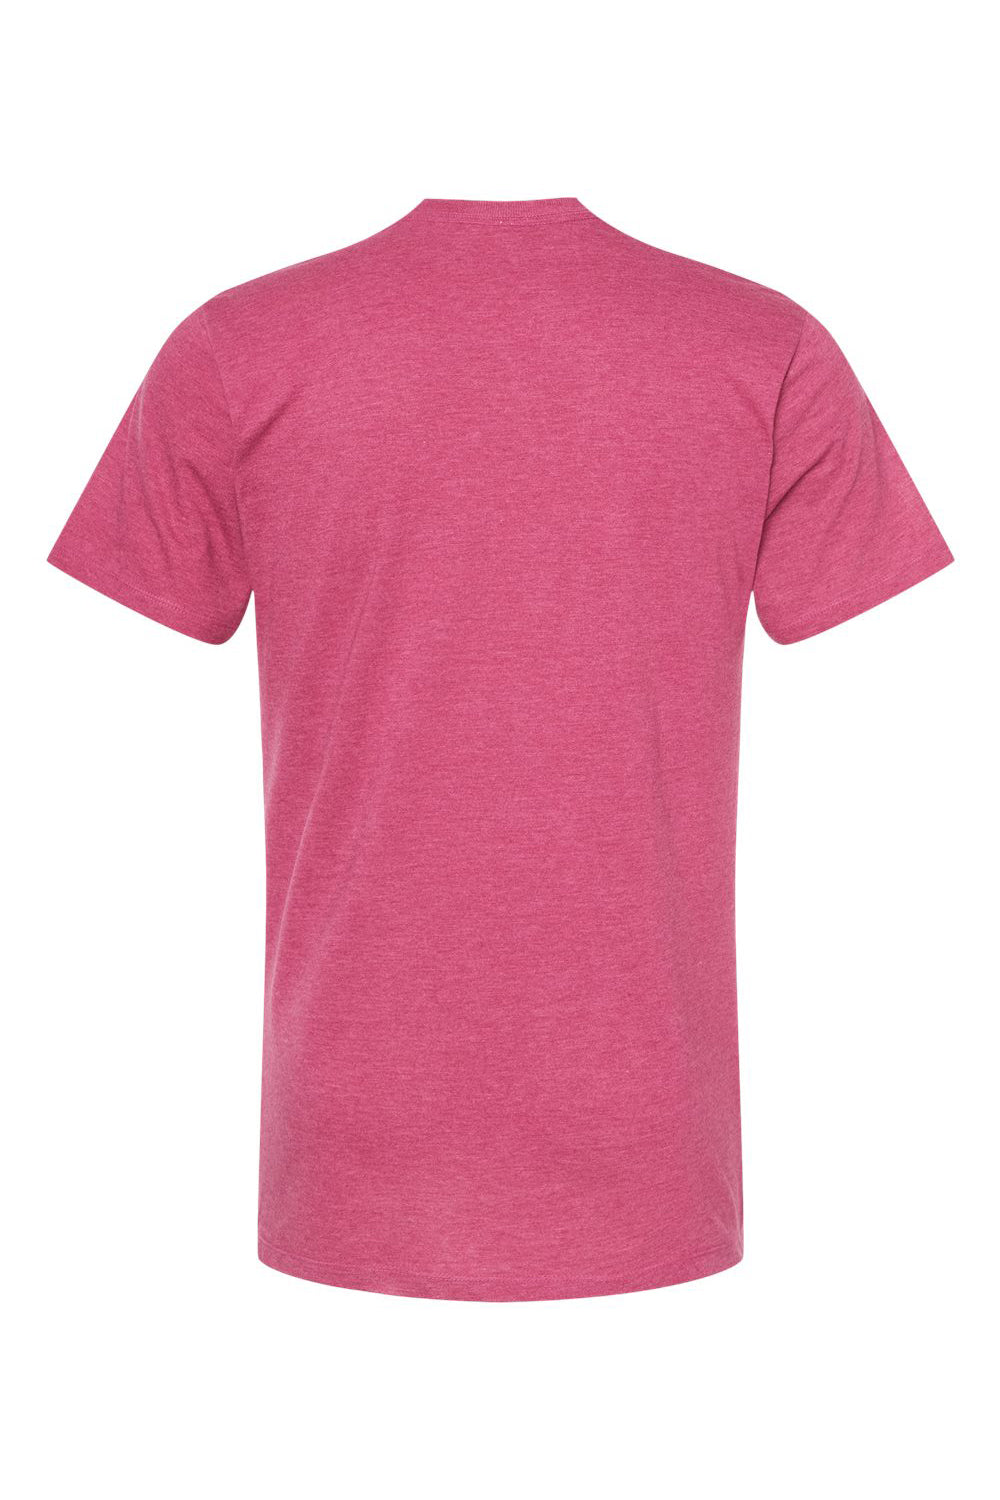 Tultex 541 Mens Premium Short Sleeve Crewneck T-Shirt Heather Cactus Flower Pink Flat Back